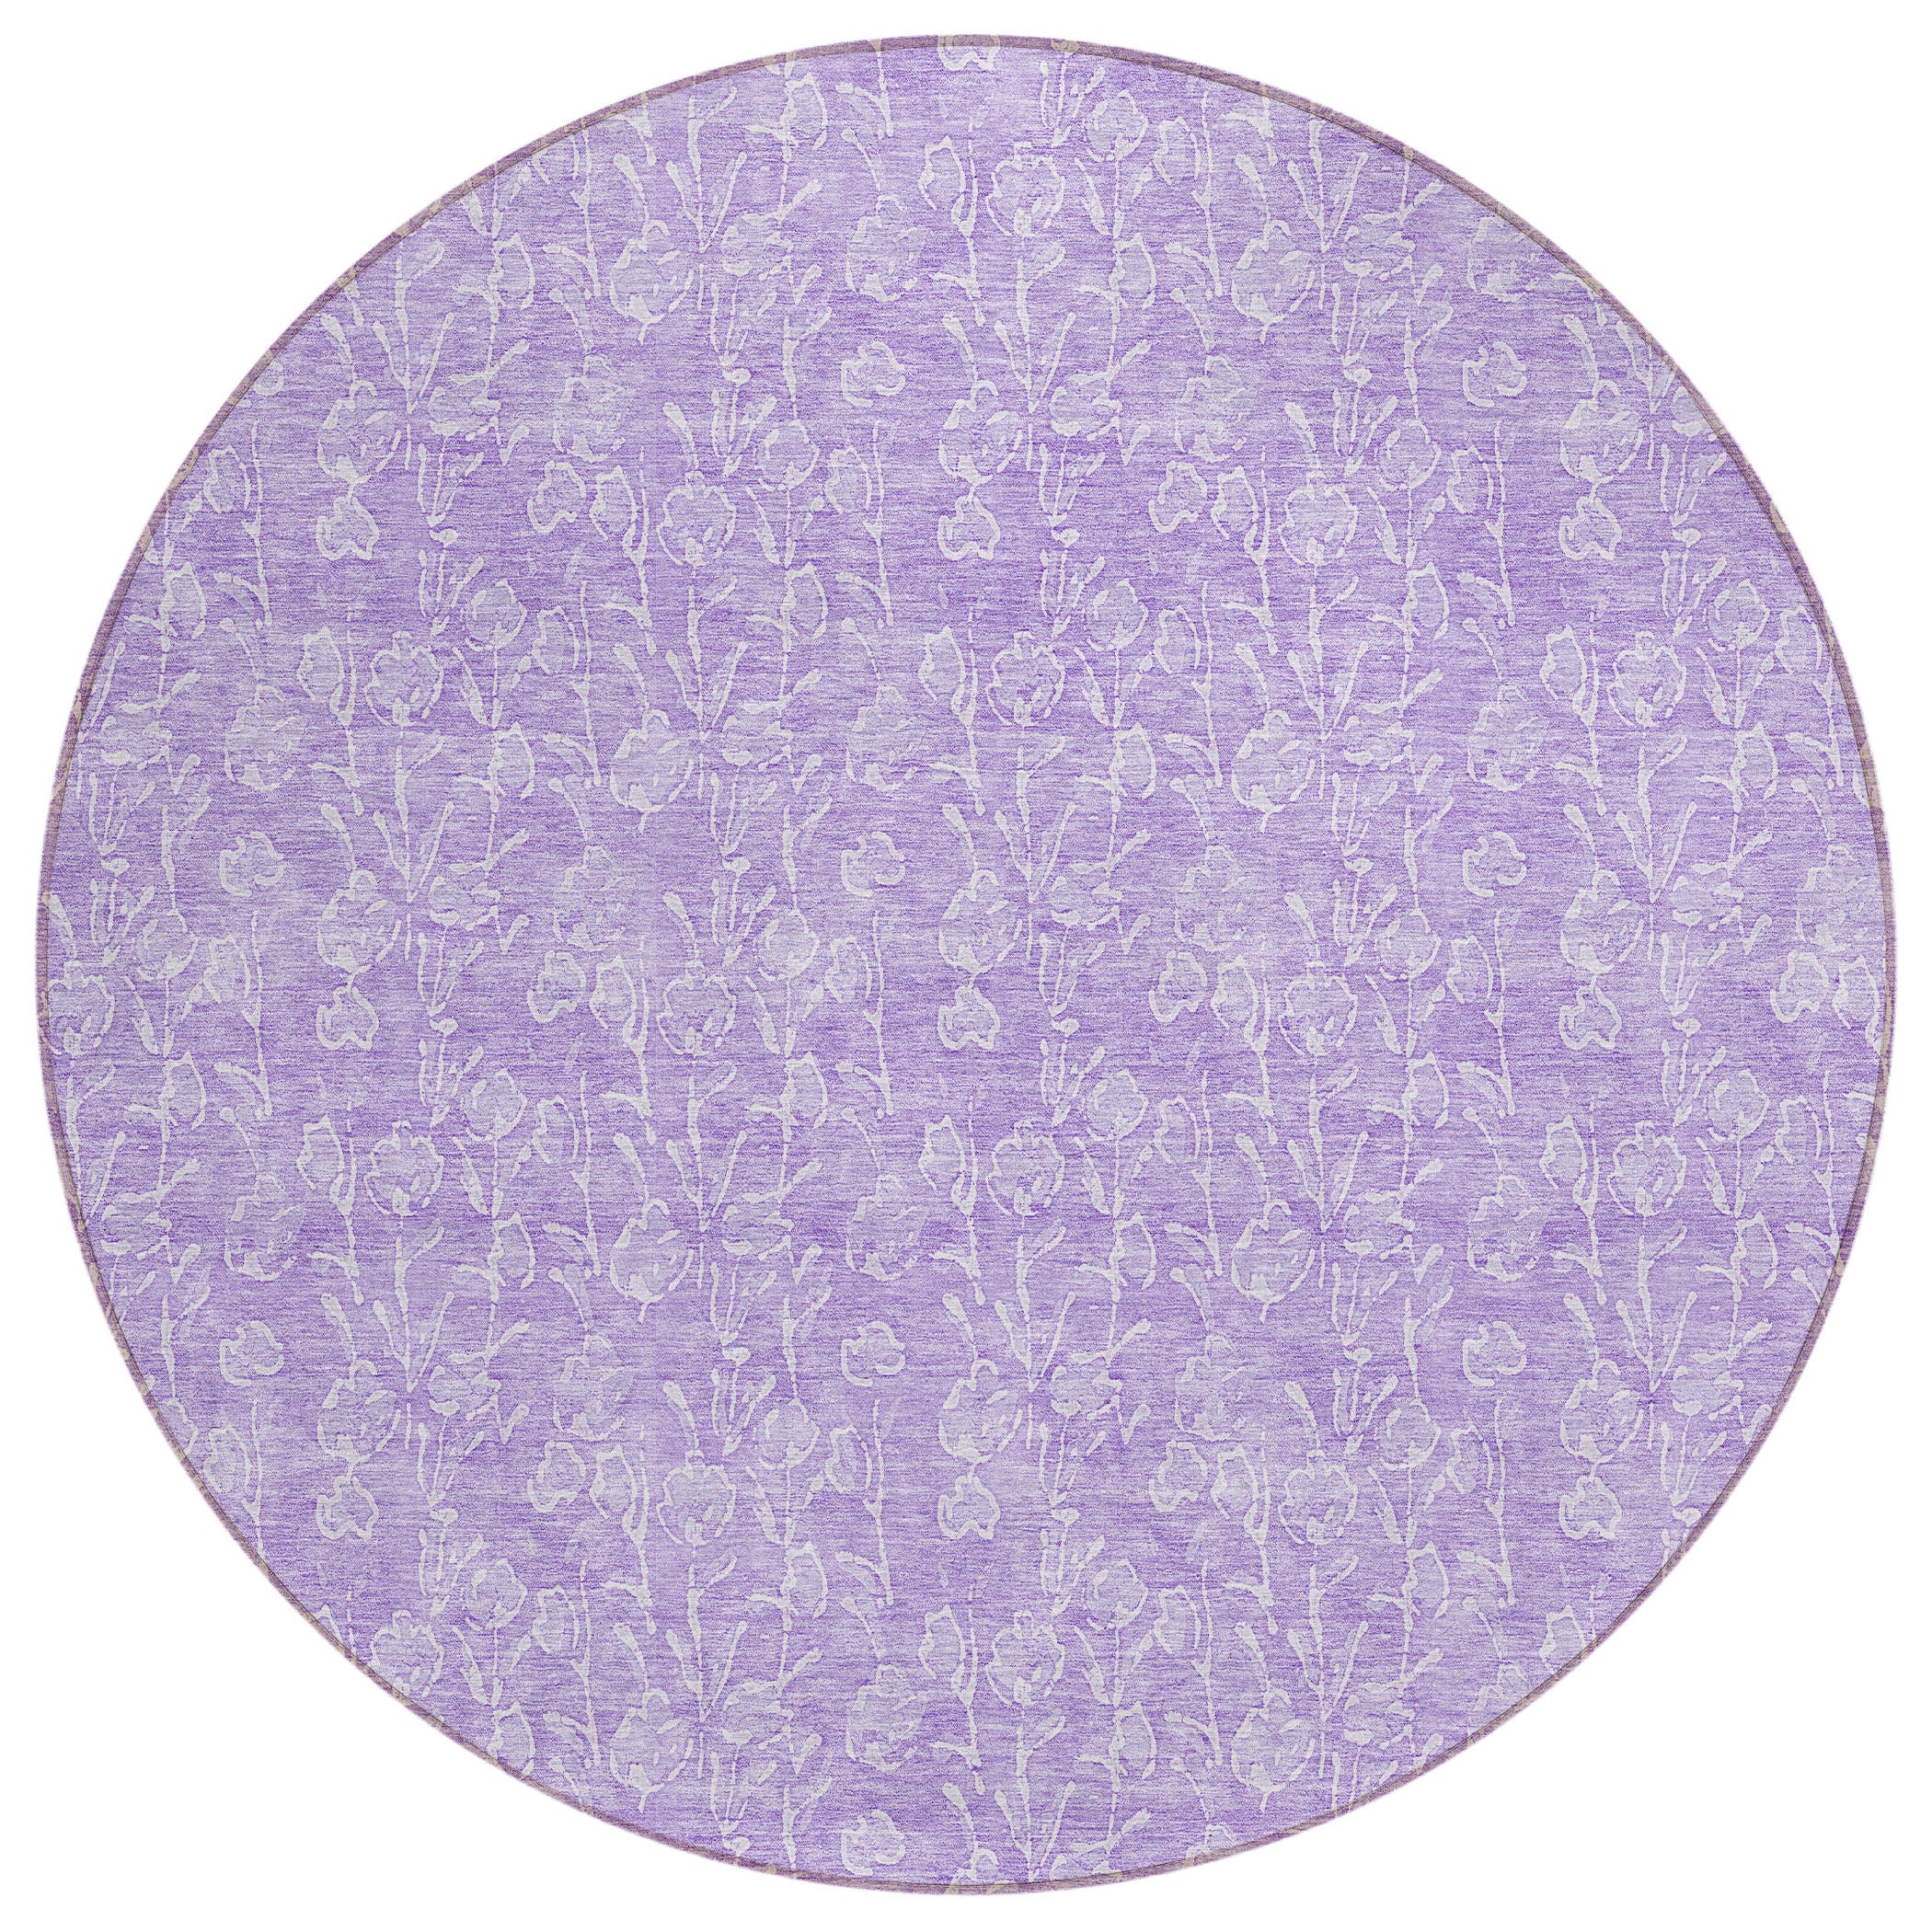 Chantille ACN691 Lilac